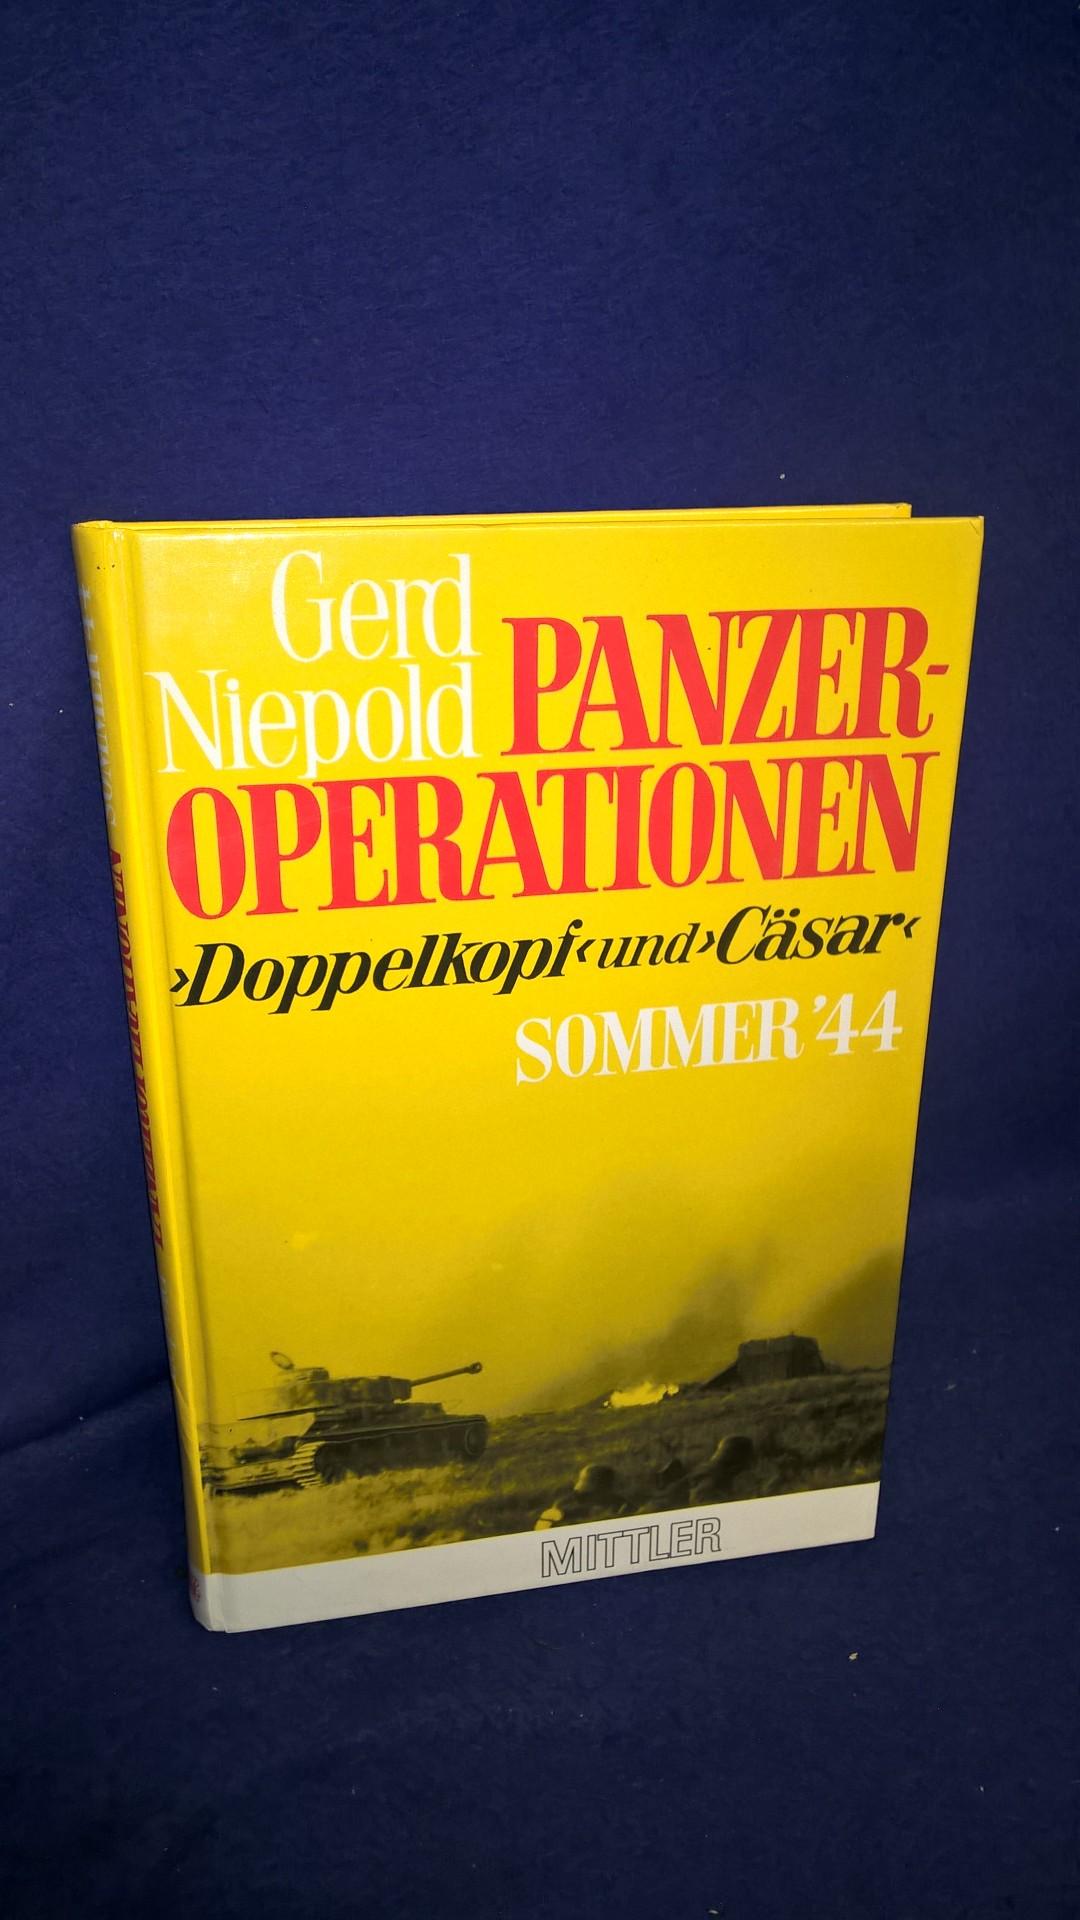 Panzer-Operationen "Doppelkopf und Cäsar" Kurland- Sommer ´44